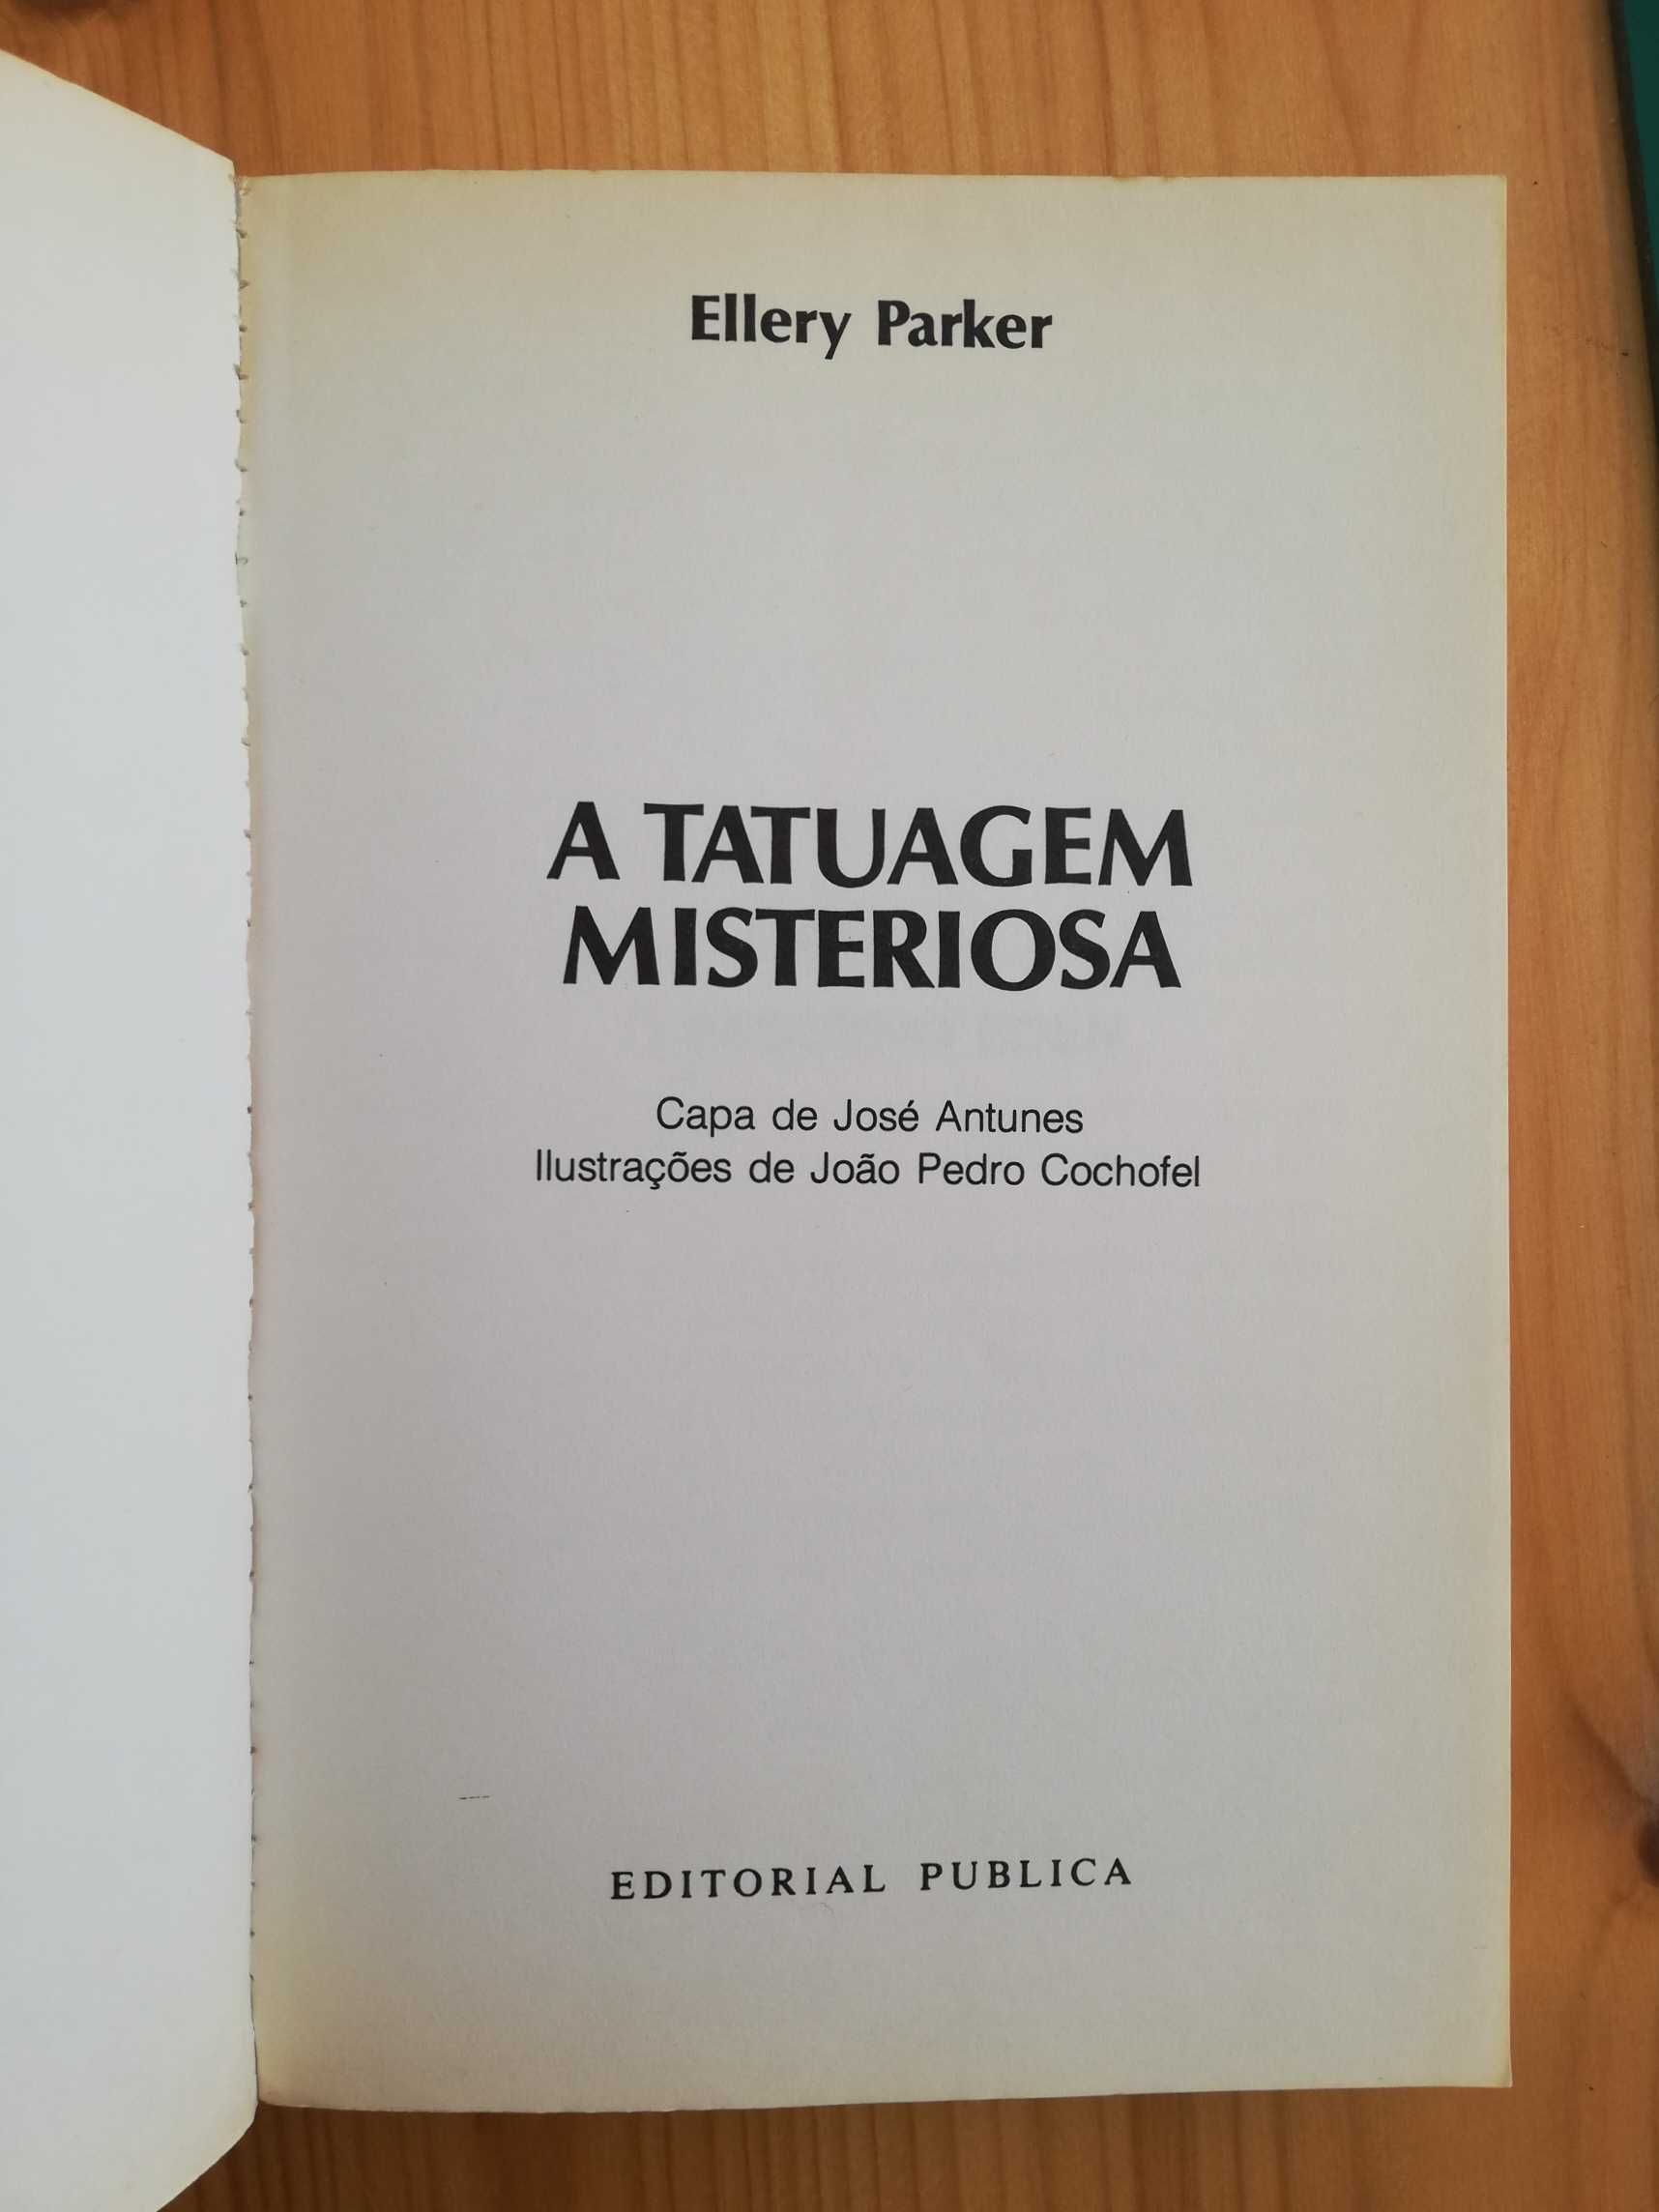 Livro "A tatuagem misteriosa" - Ellery Parker